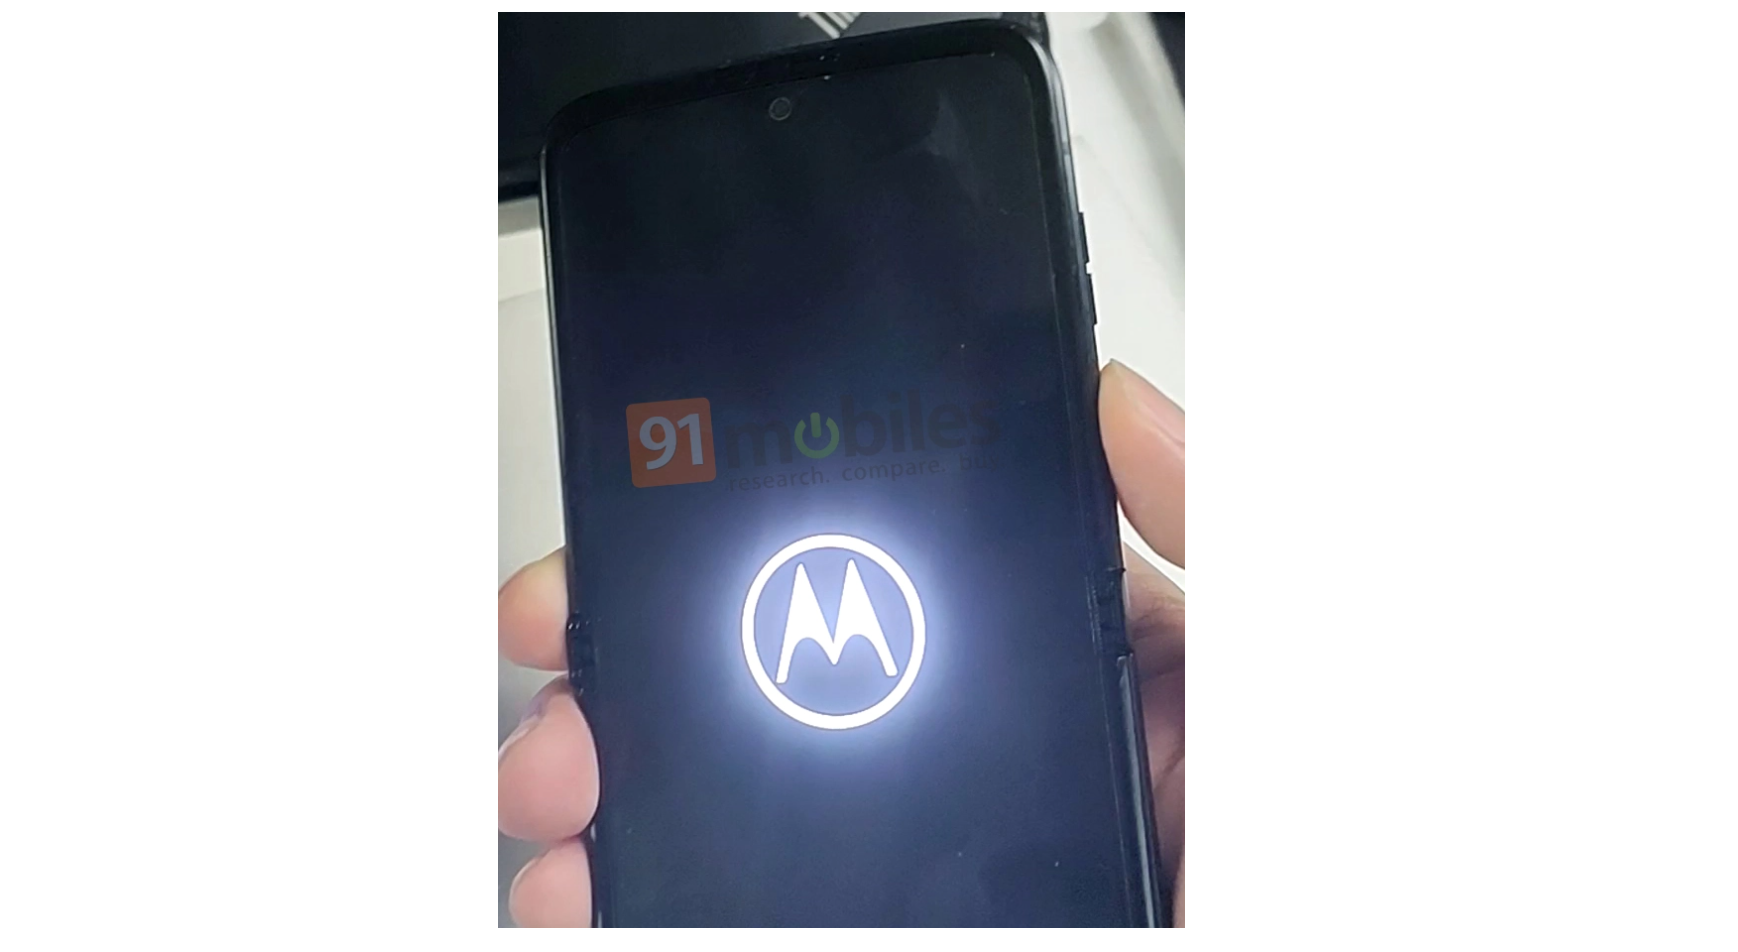 Leaked Photos Show Motorola’s next foldable smartphone